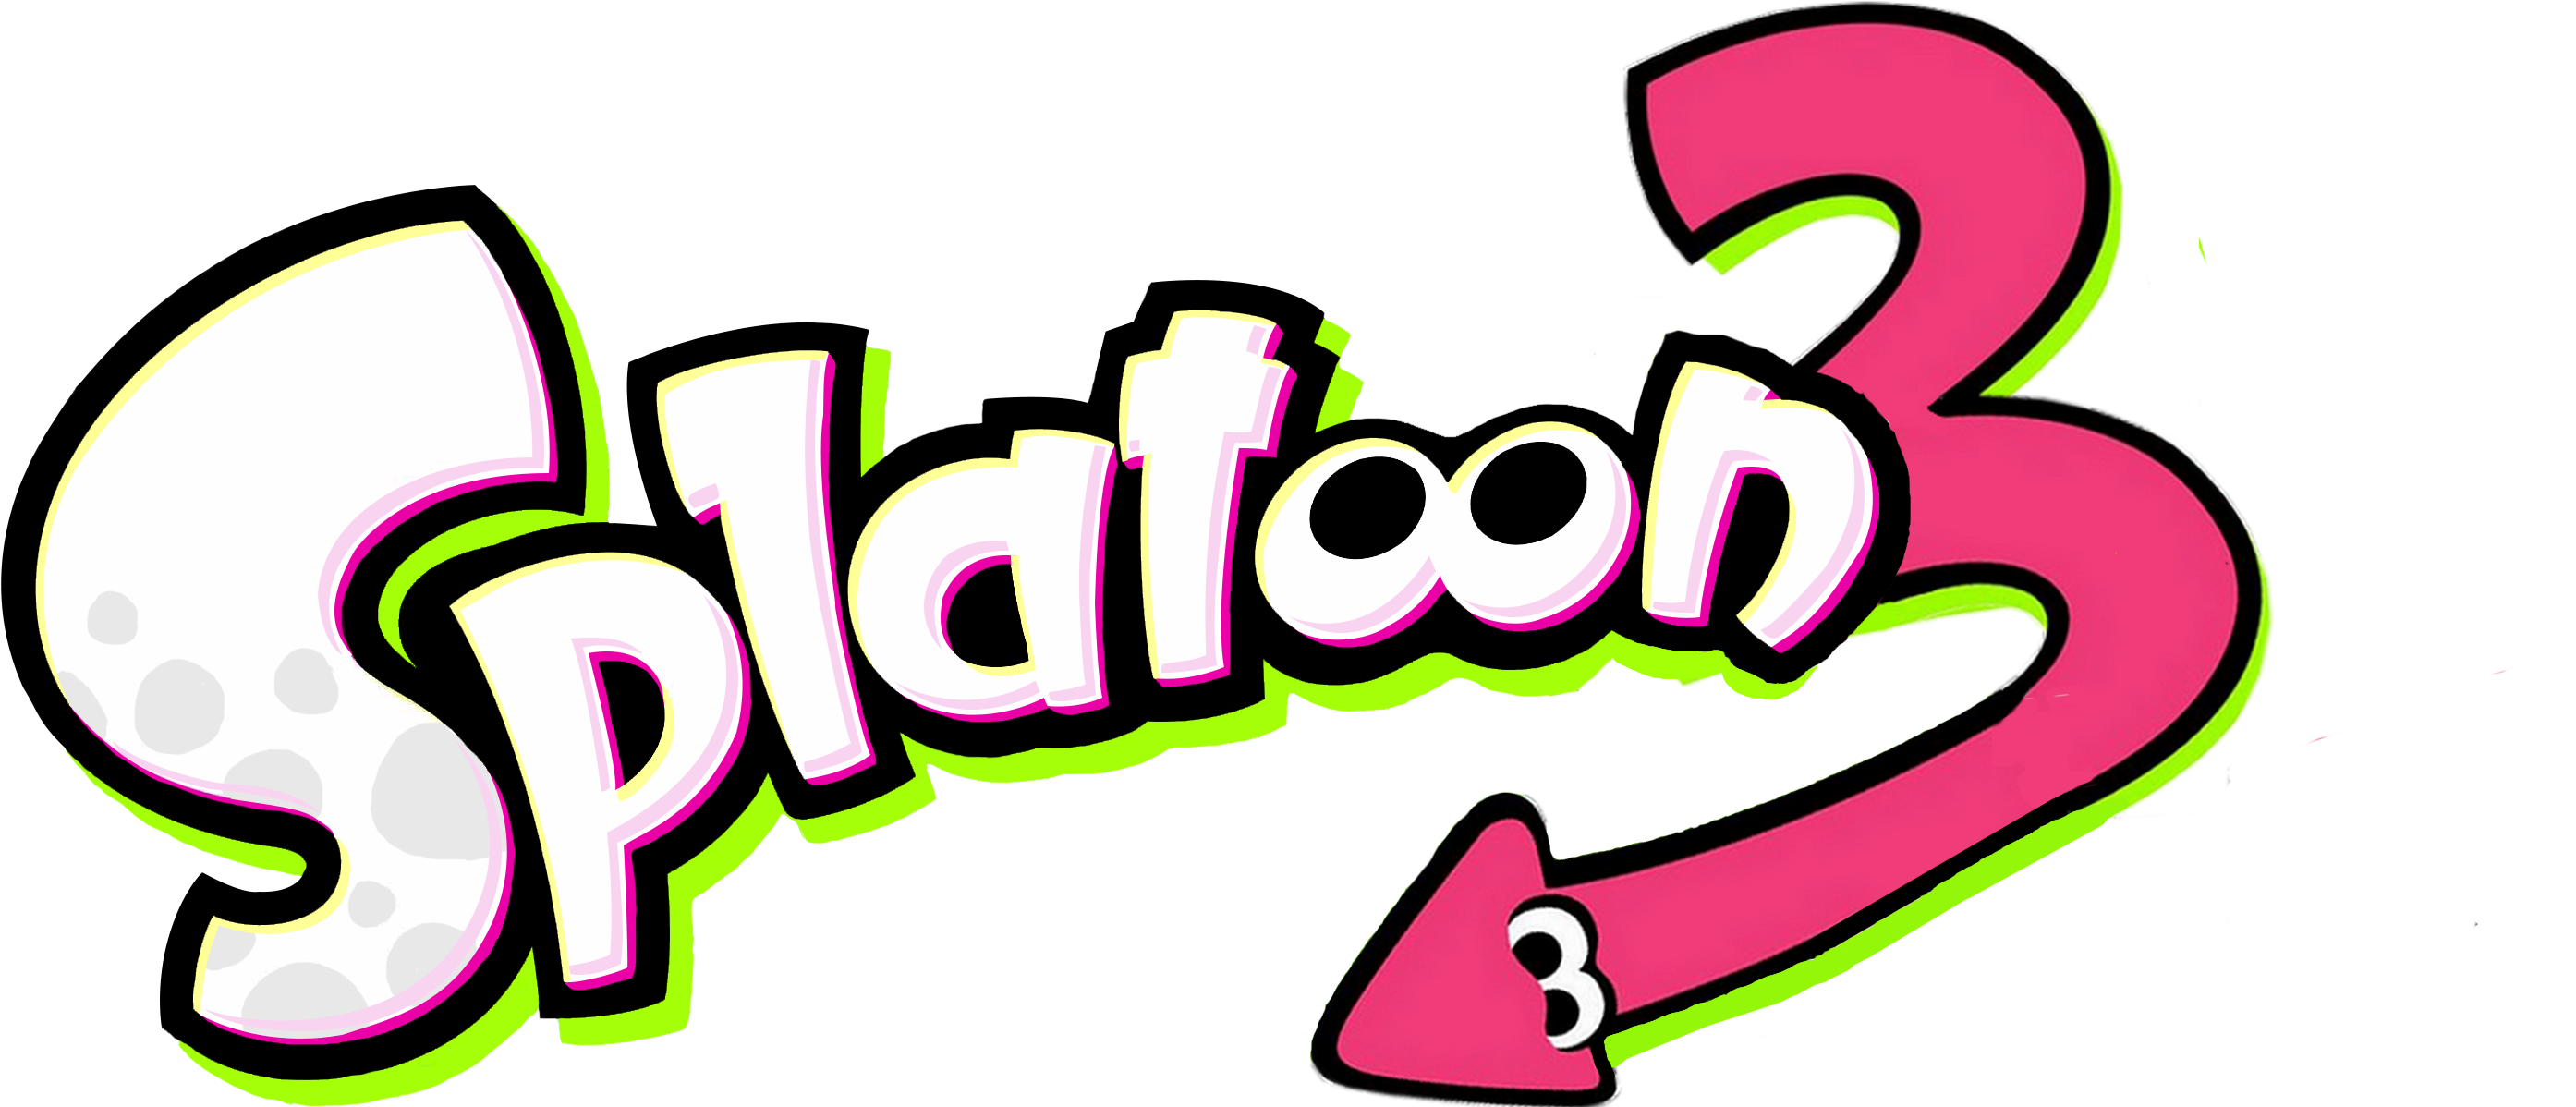 Fan Artsplatoon 3 Fan-made Logo - Splatoon 2 Octo Expansion Logo (2833x1207)